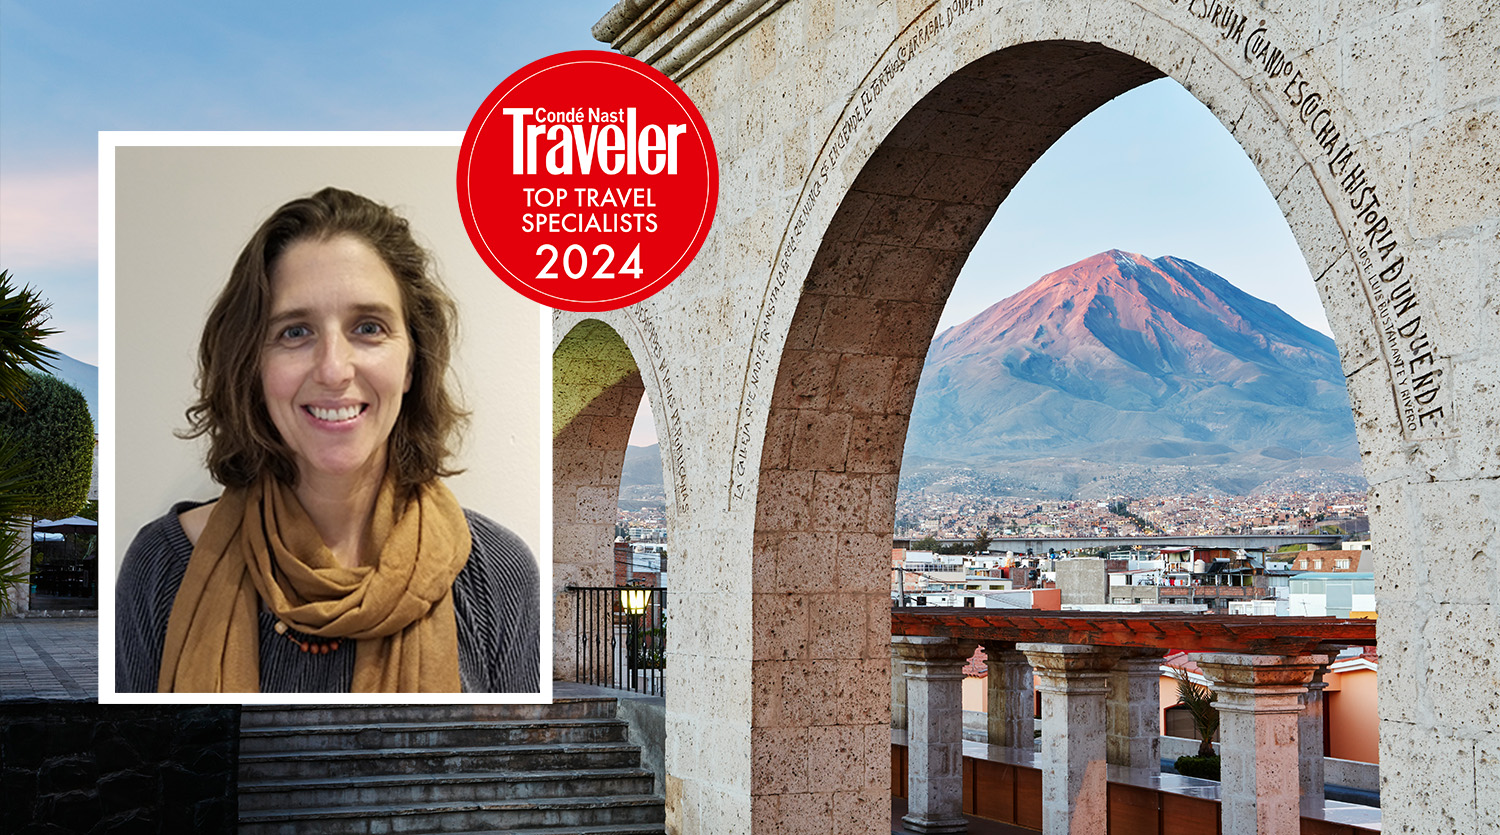 Condé Nast Traveler Top Travel Specialist 2024 - Ker & Downey Travel  Designer Honored